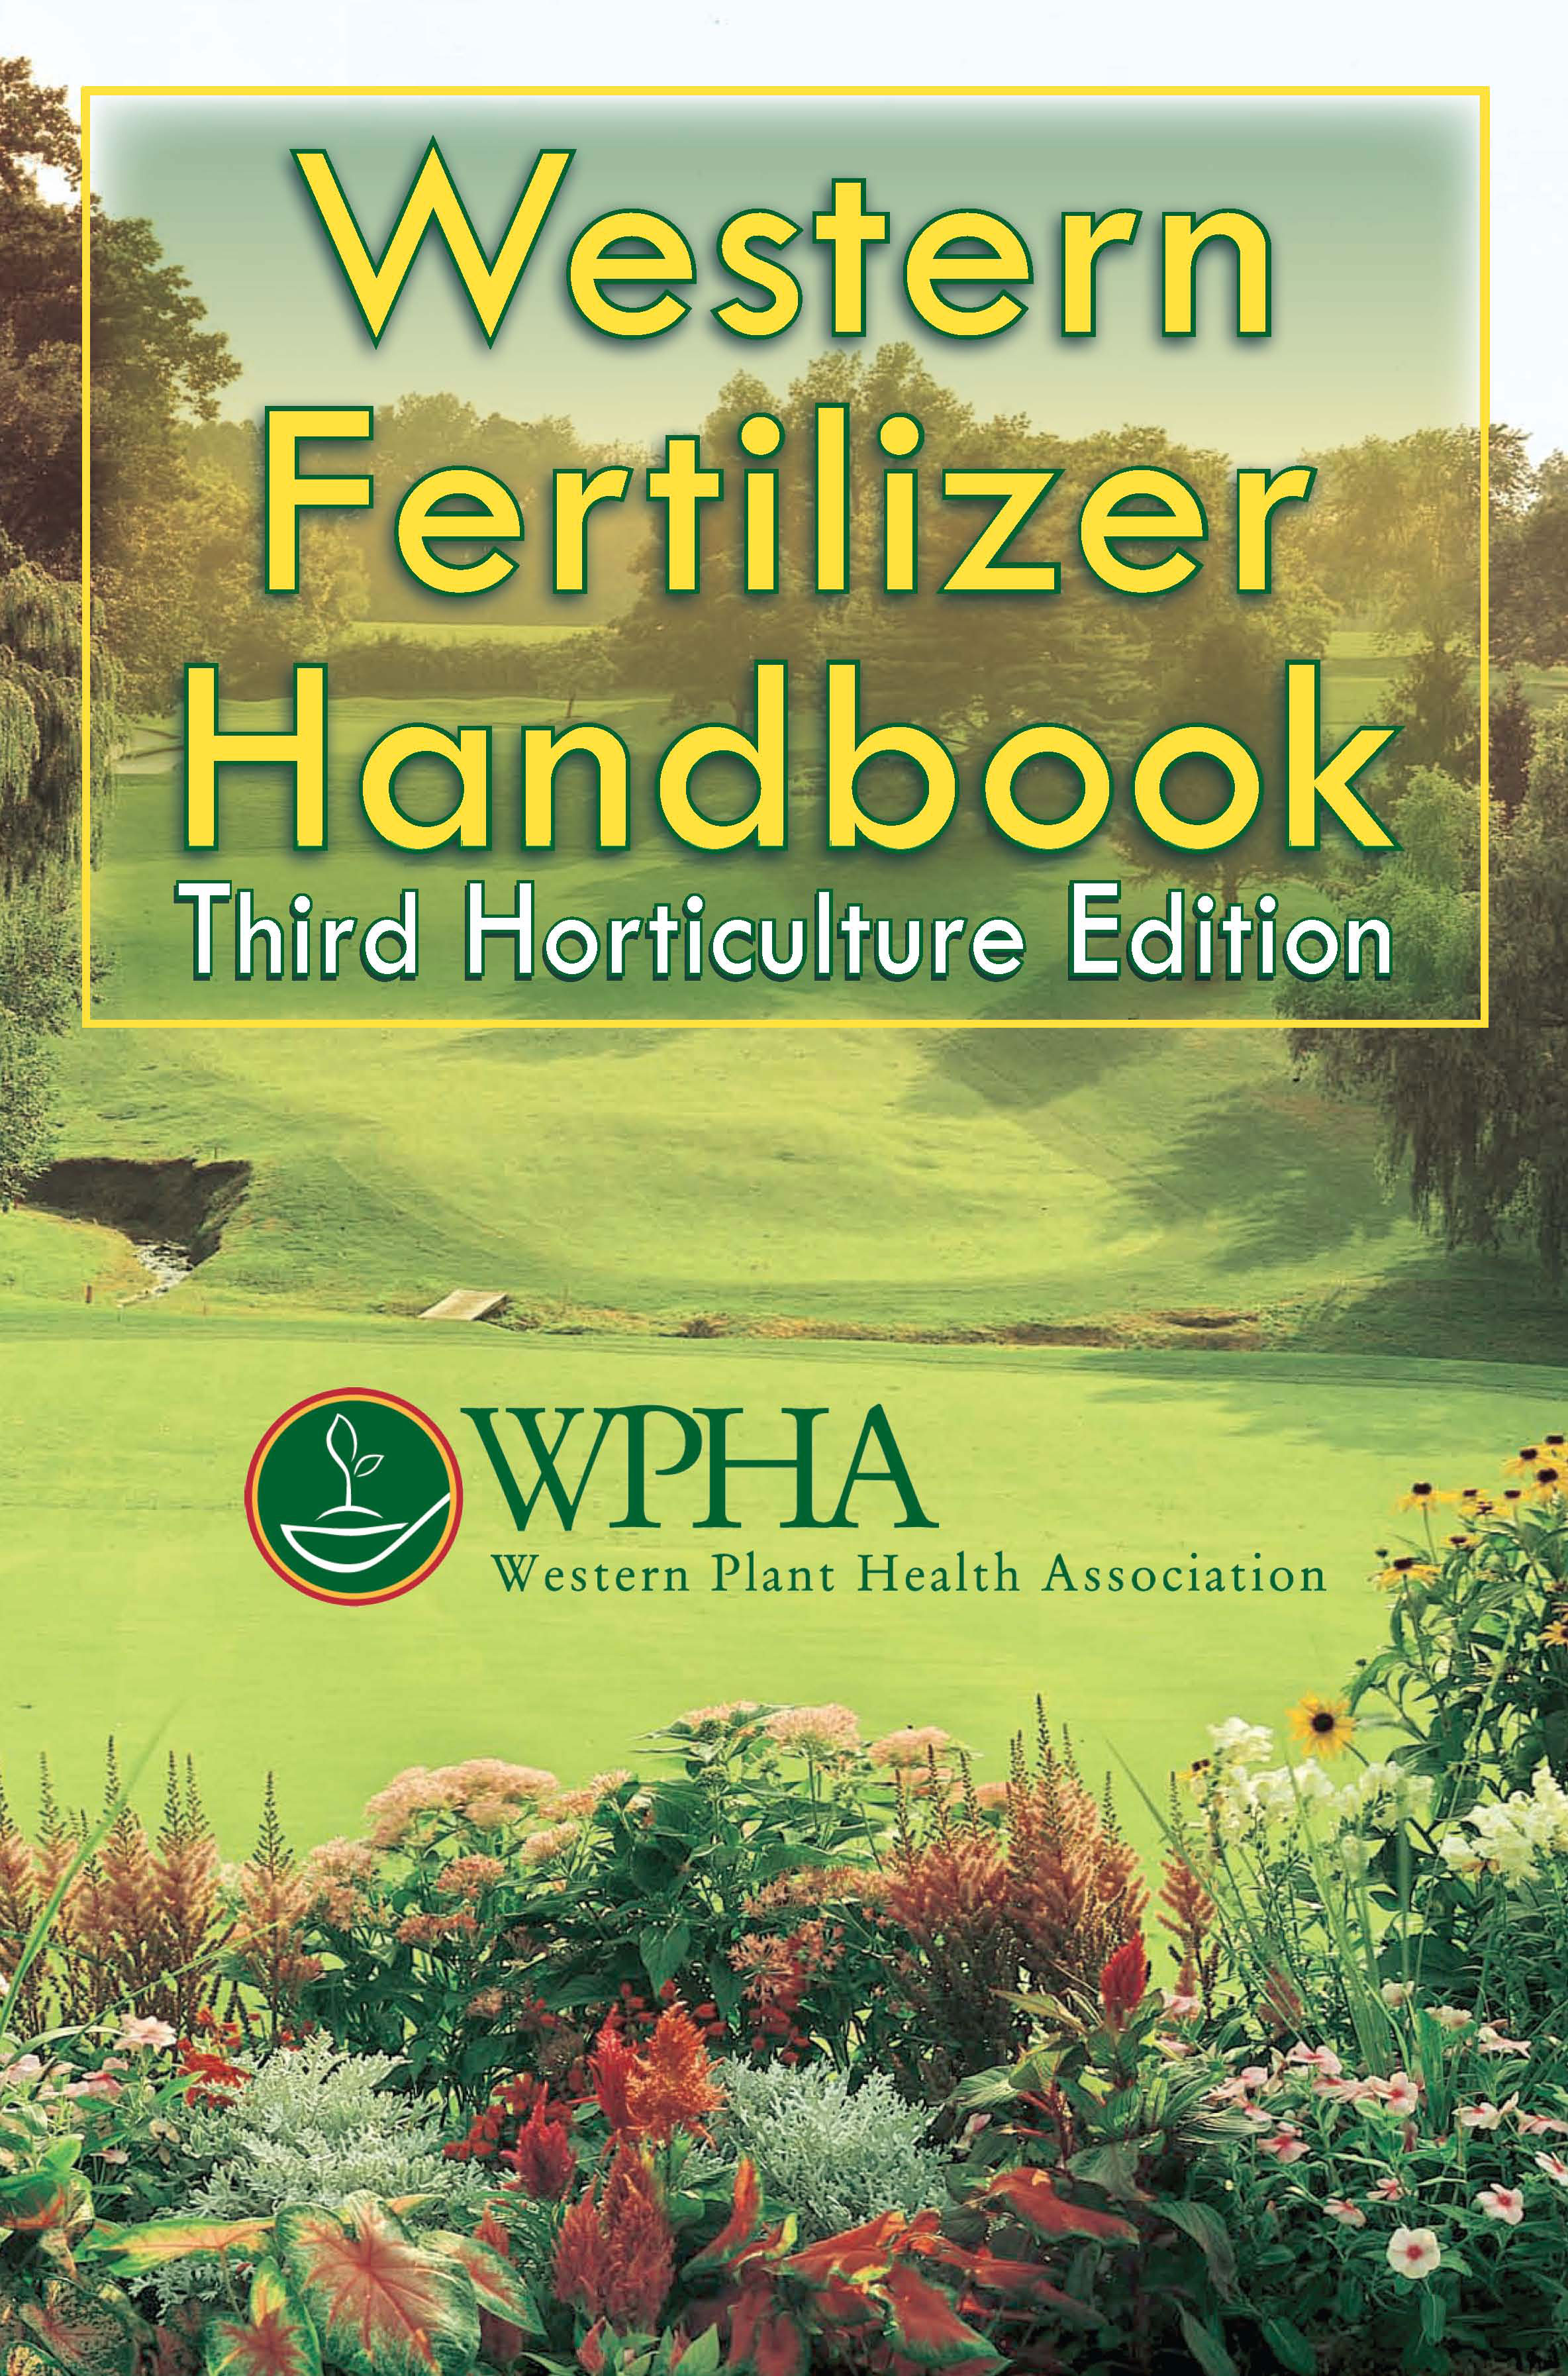 Western Fertilizer Handbook, Third Horticulture Edition:  by   Western Plant Health Association, Jerome  Pier, Dave  Barlow